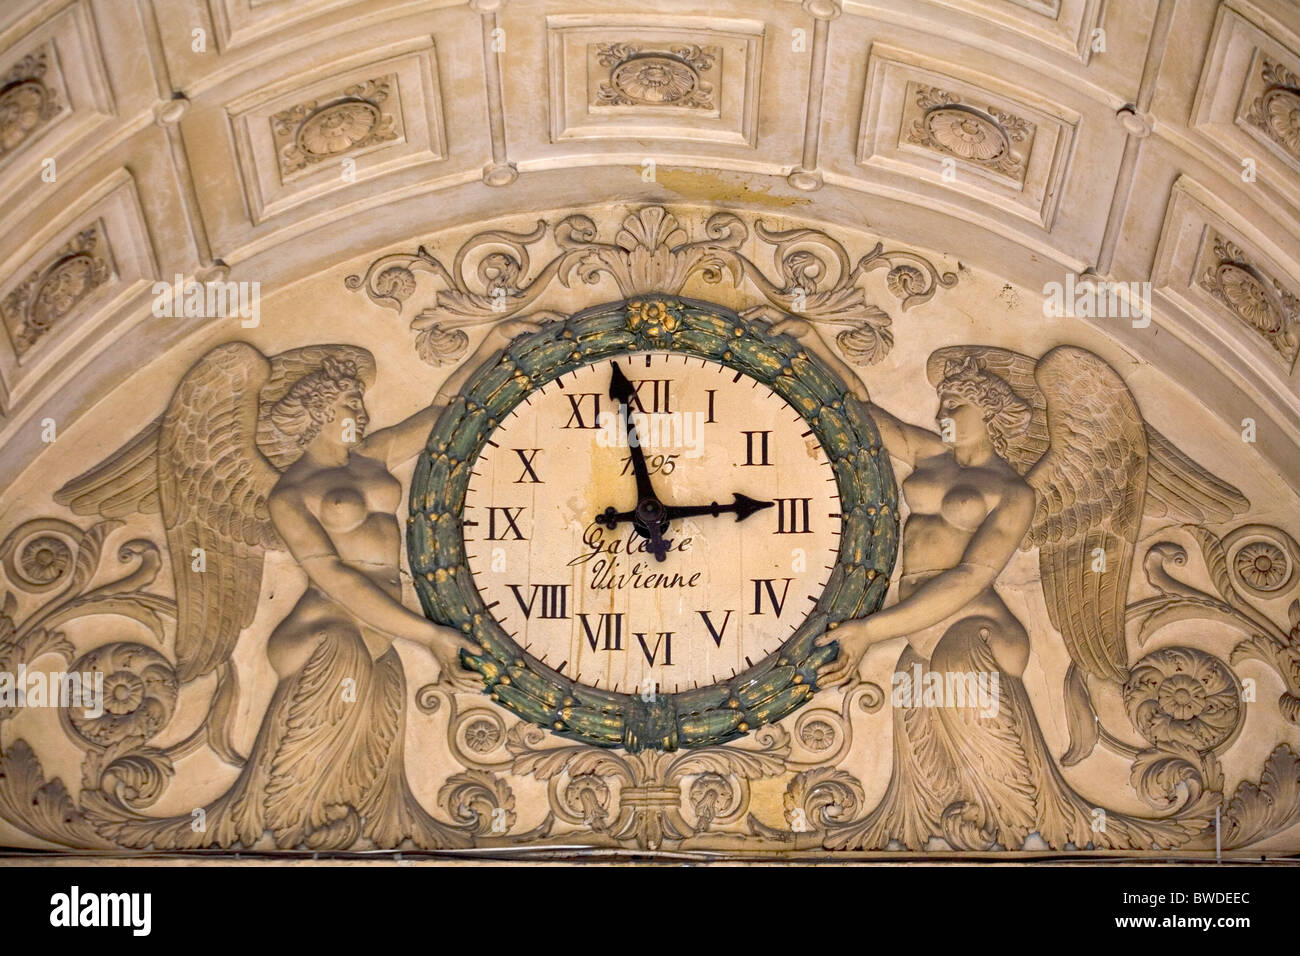 clock in galerie vivienne Stock Photo